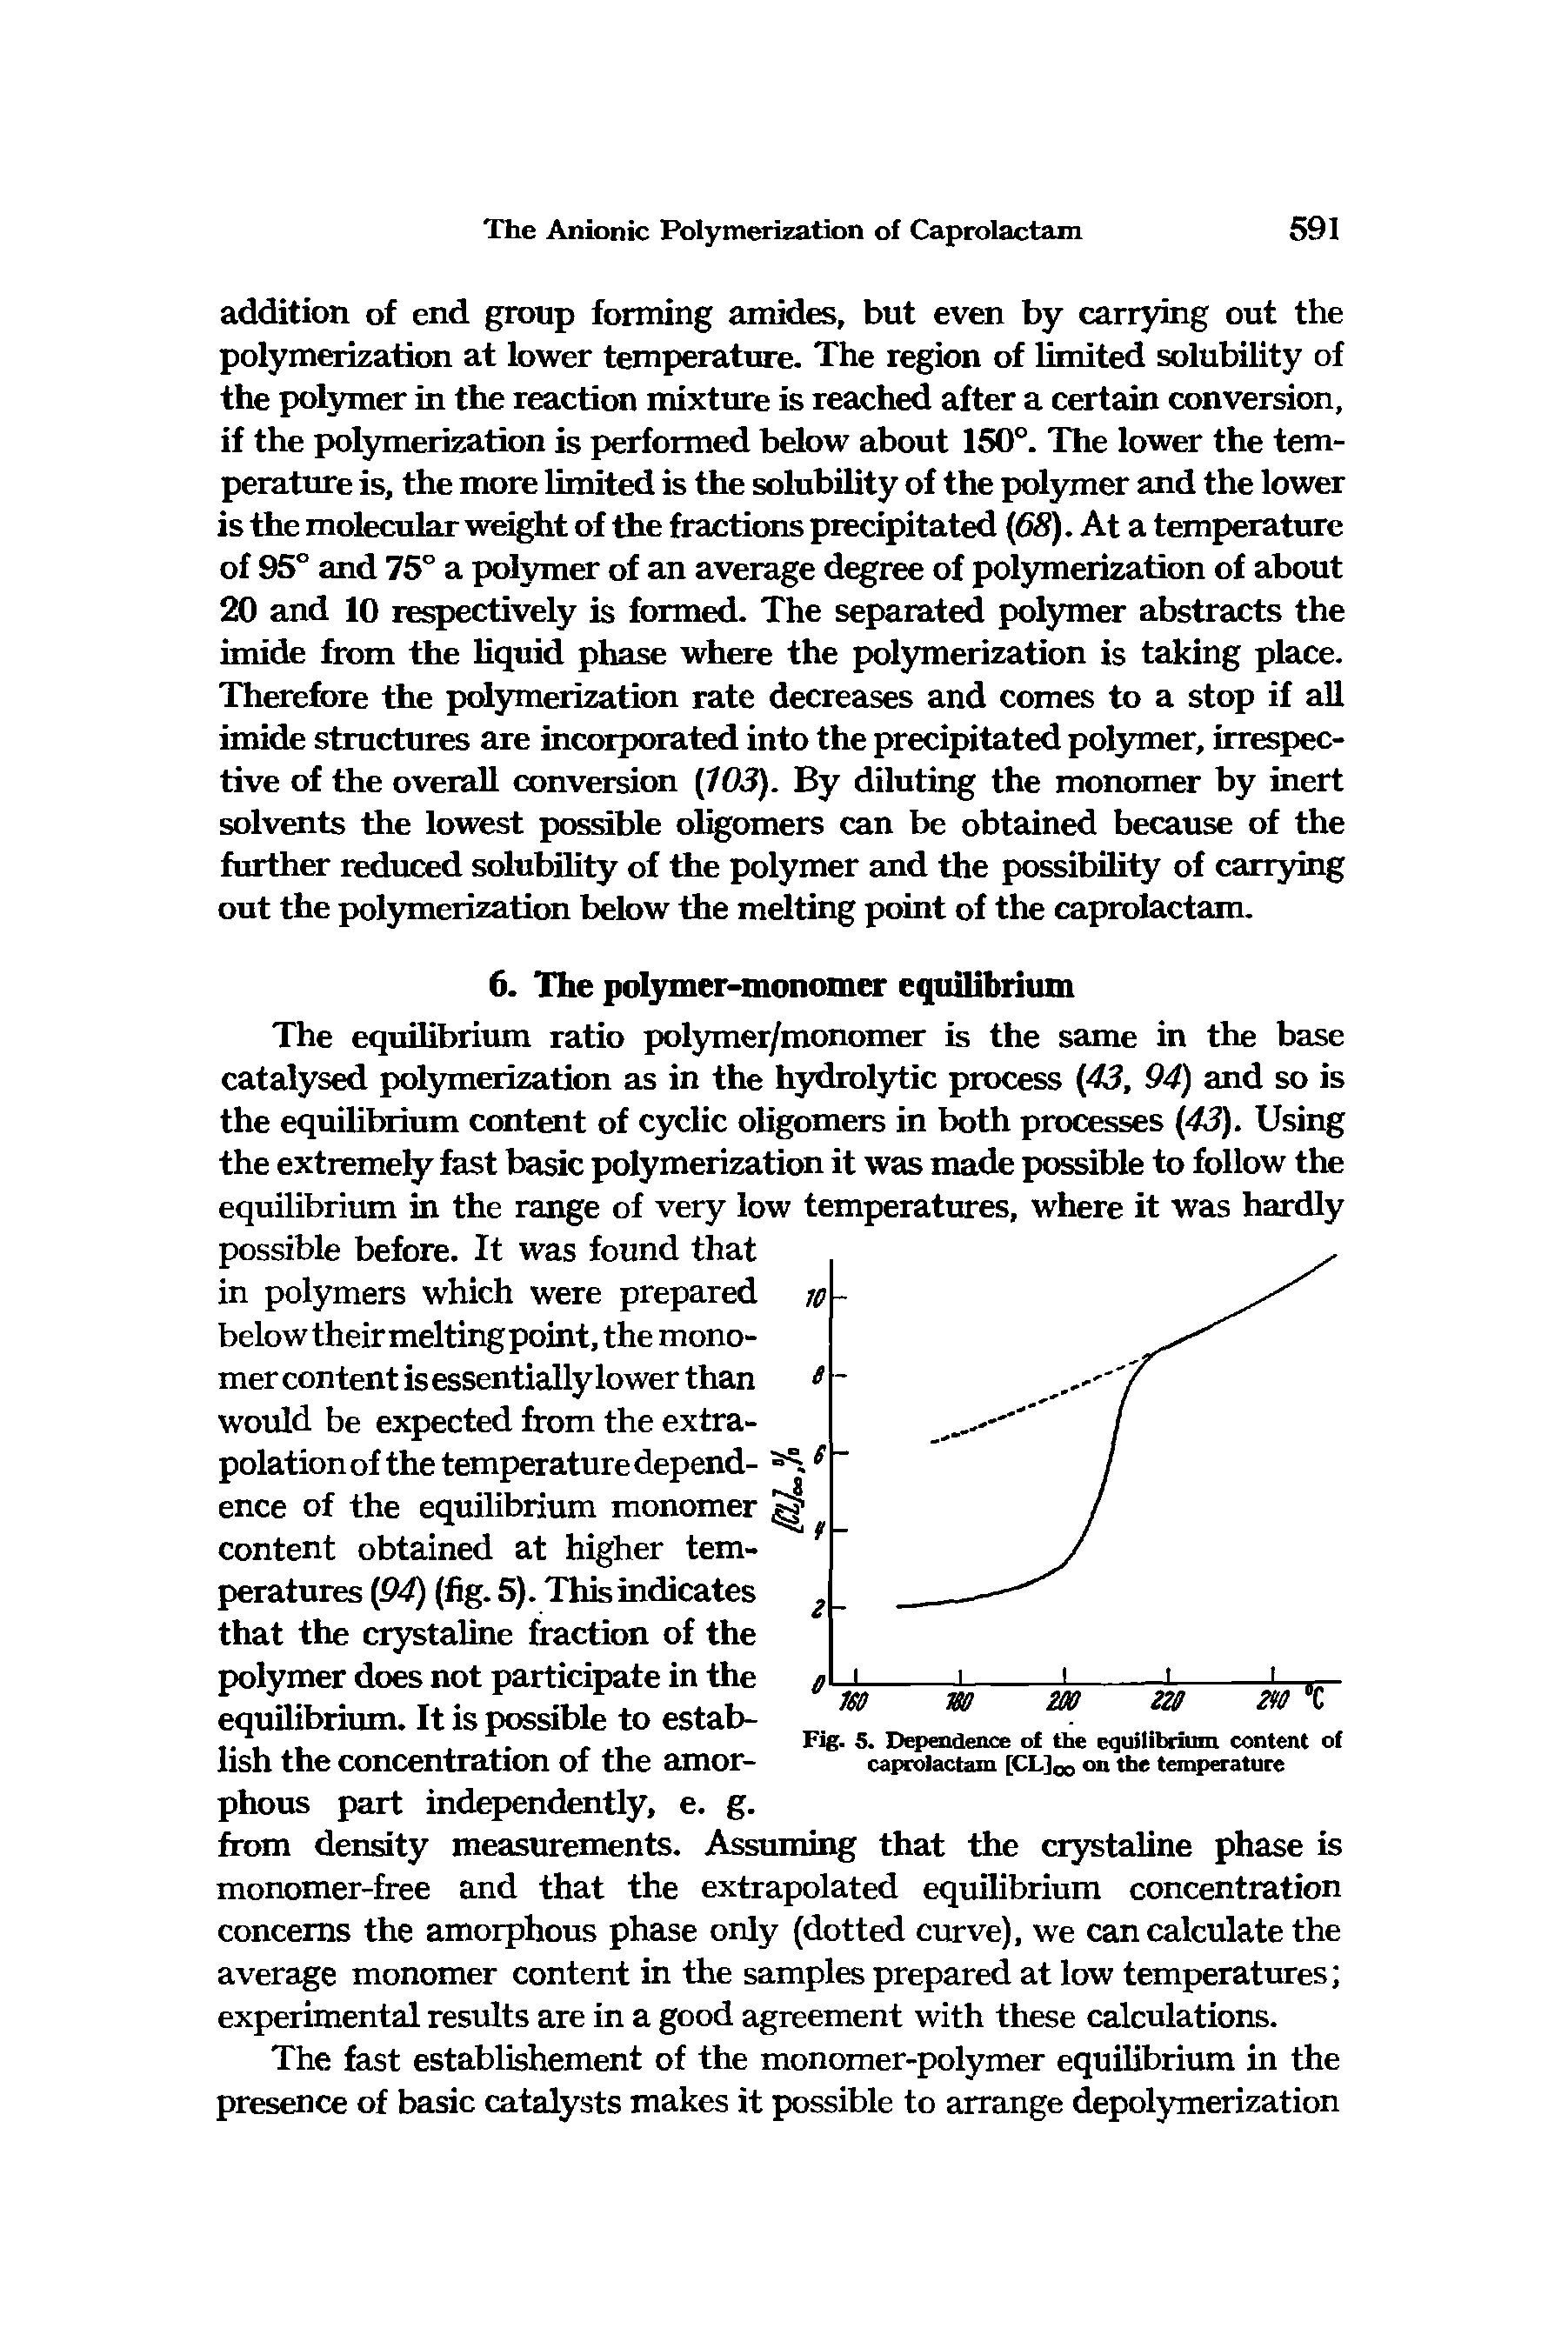 Fig. 5. Dependence of the equilibrium content of caprolactam [CLJqq on the temperature...